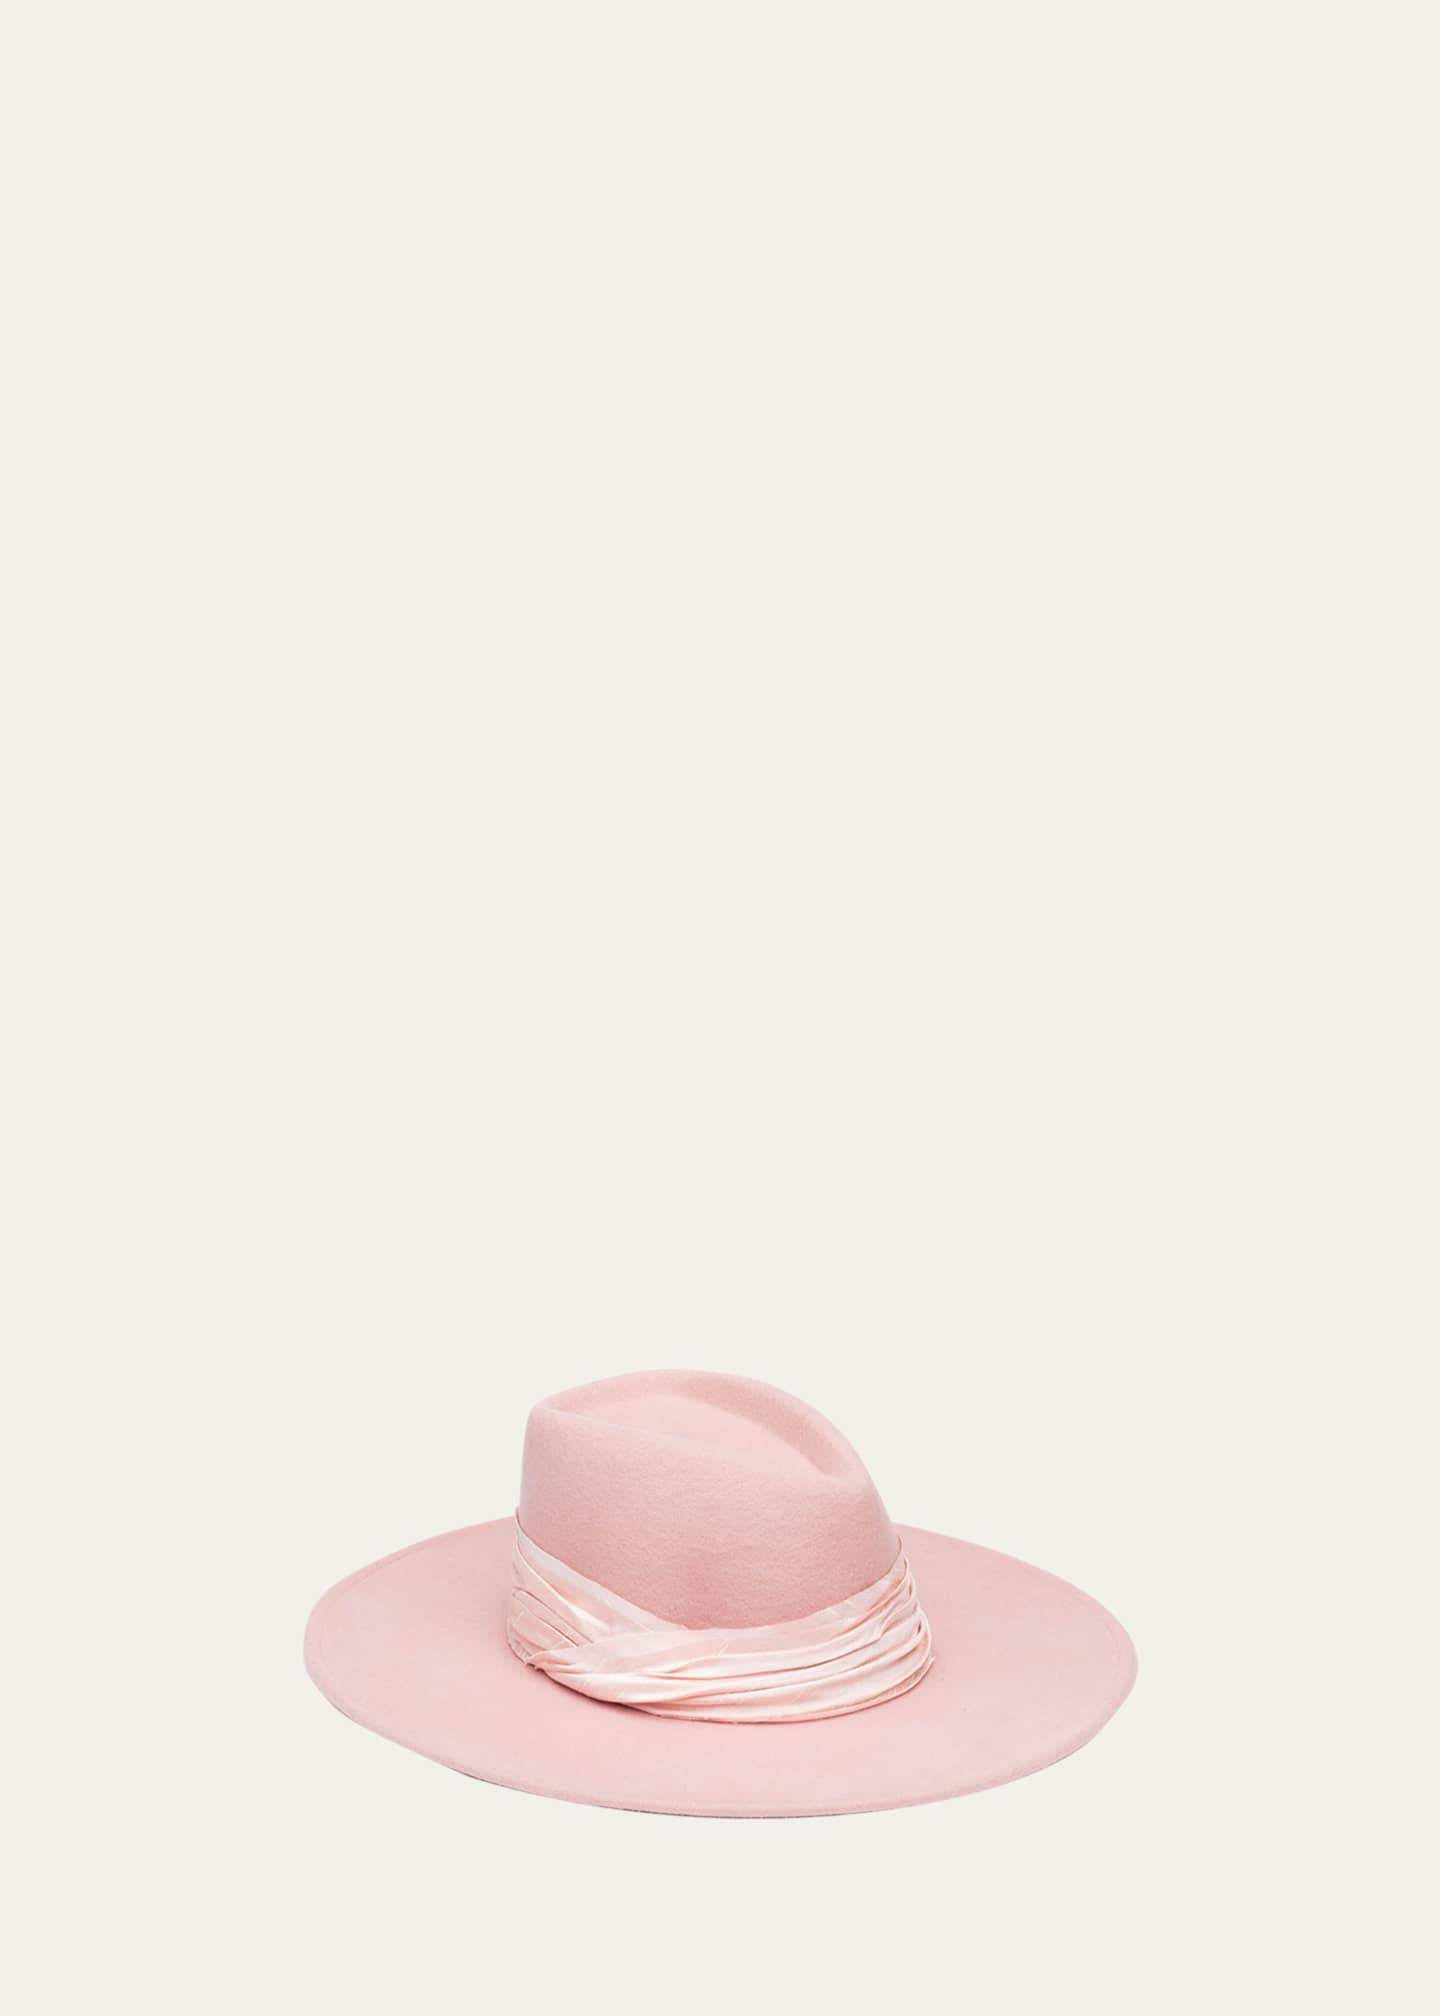 Light Pink Wide Brim Felt Hat for Women